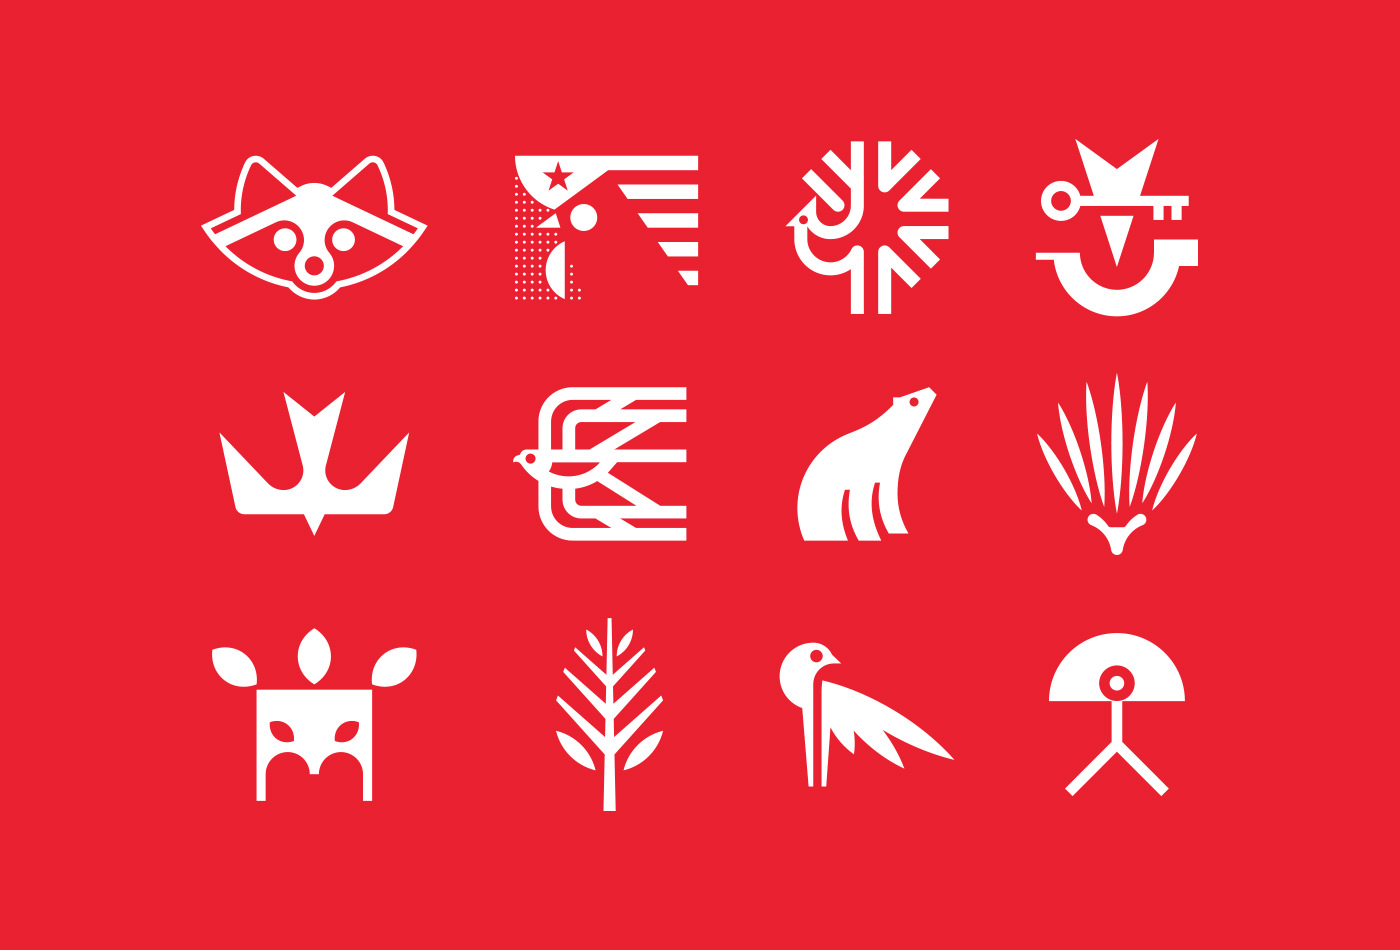 A-logo-symbol-logos-pictogram-marks-trademarks-trademark-glyph-icon-icons-logotype-collection-vacaliebres-